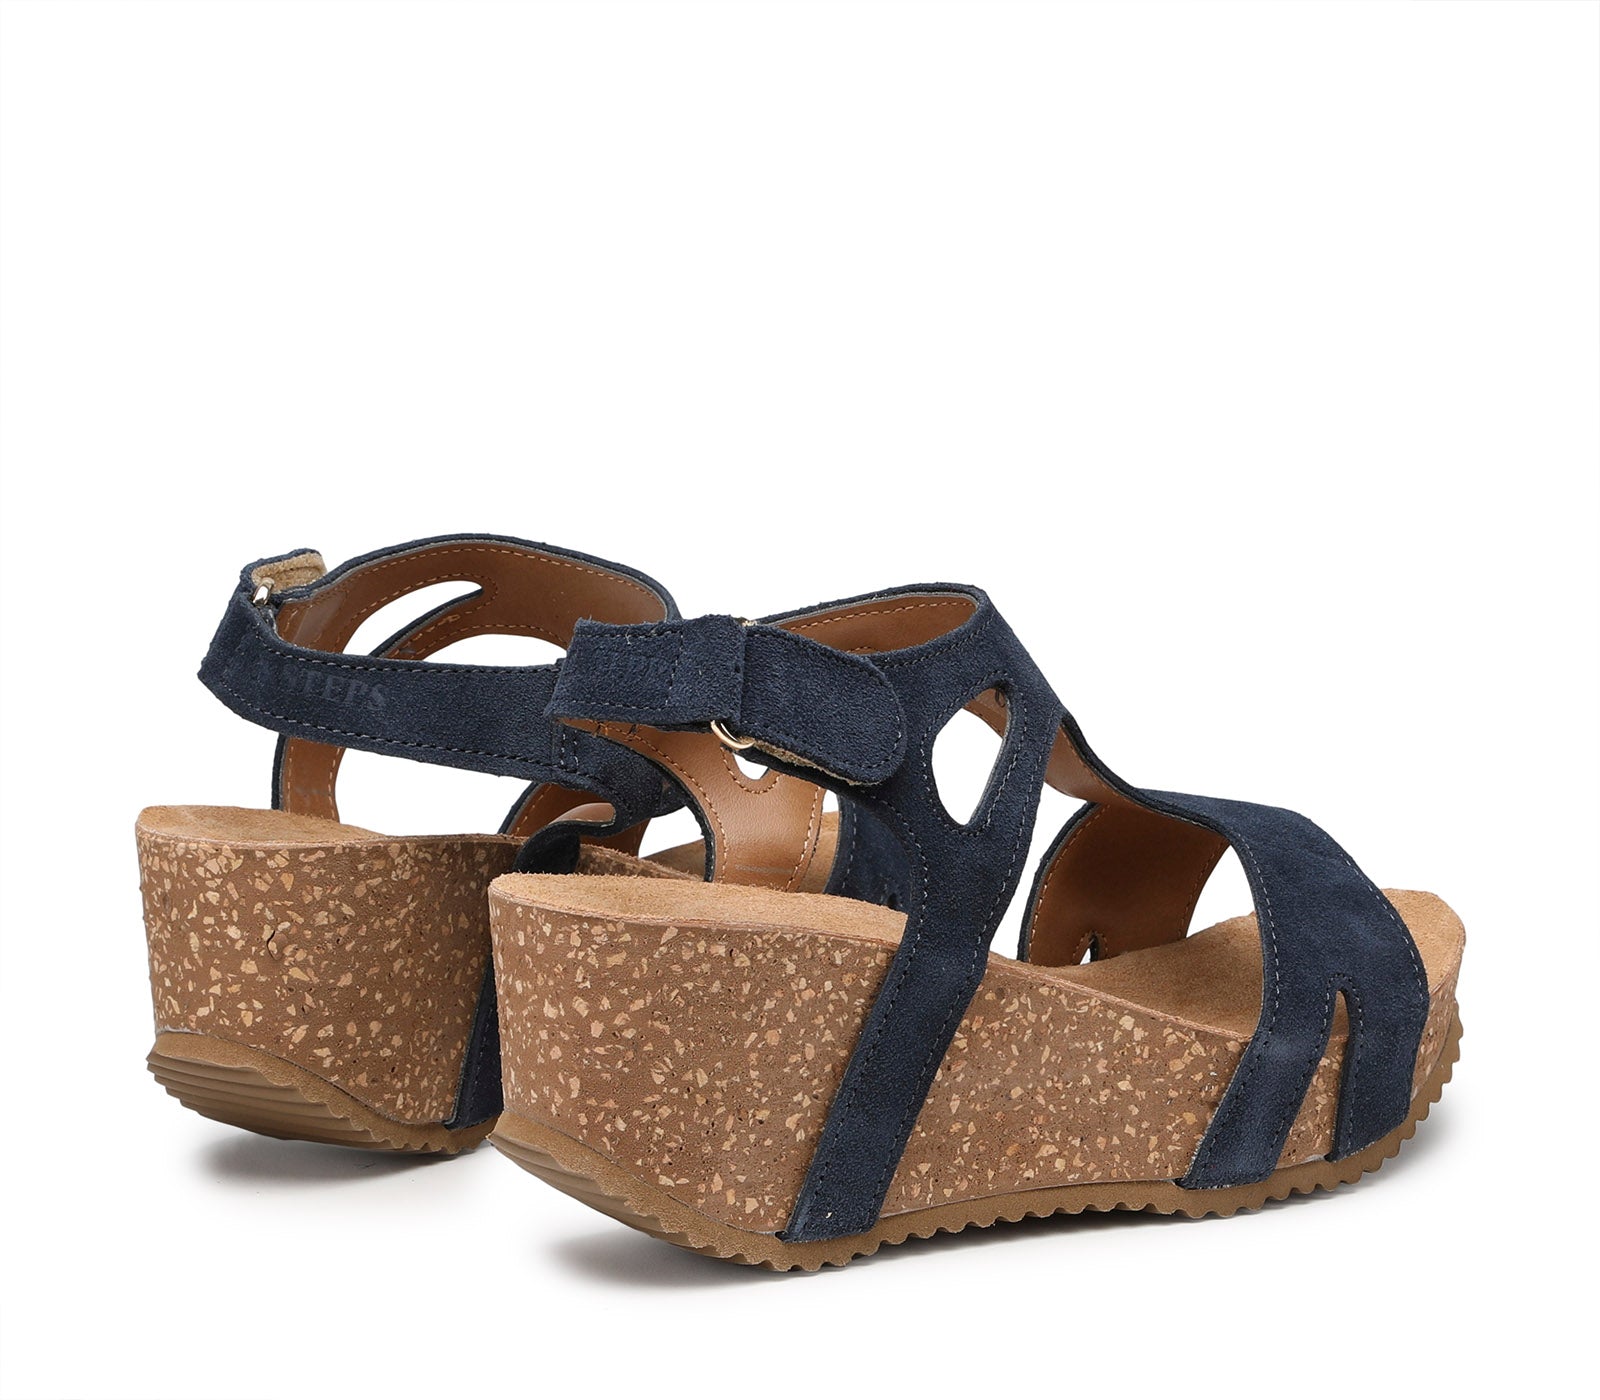 Midnight blue Docksteps women's wedge sandals